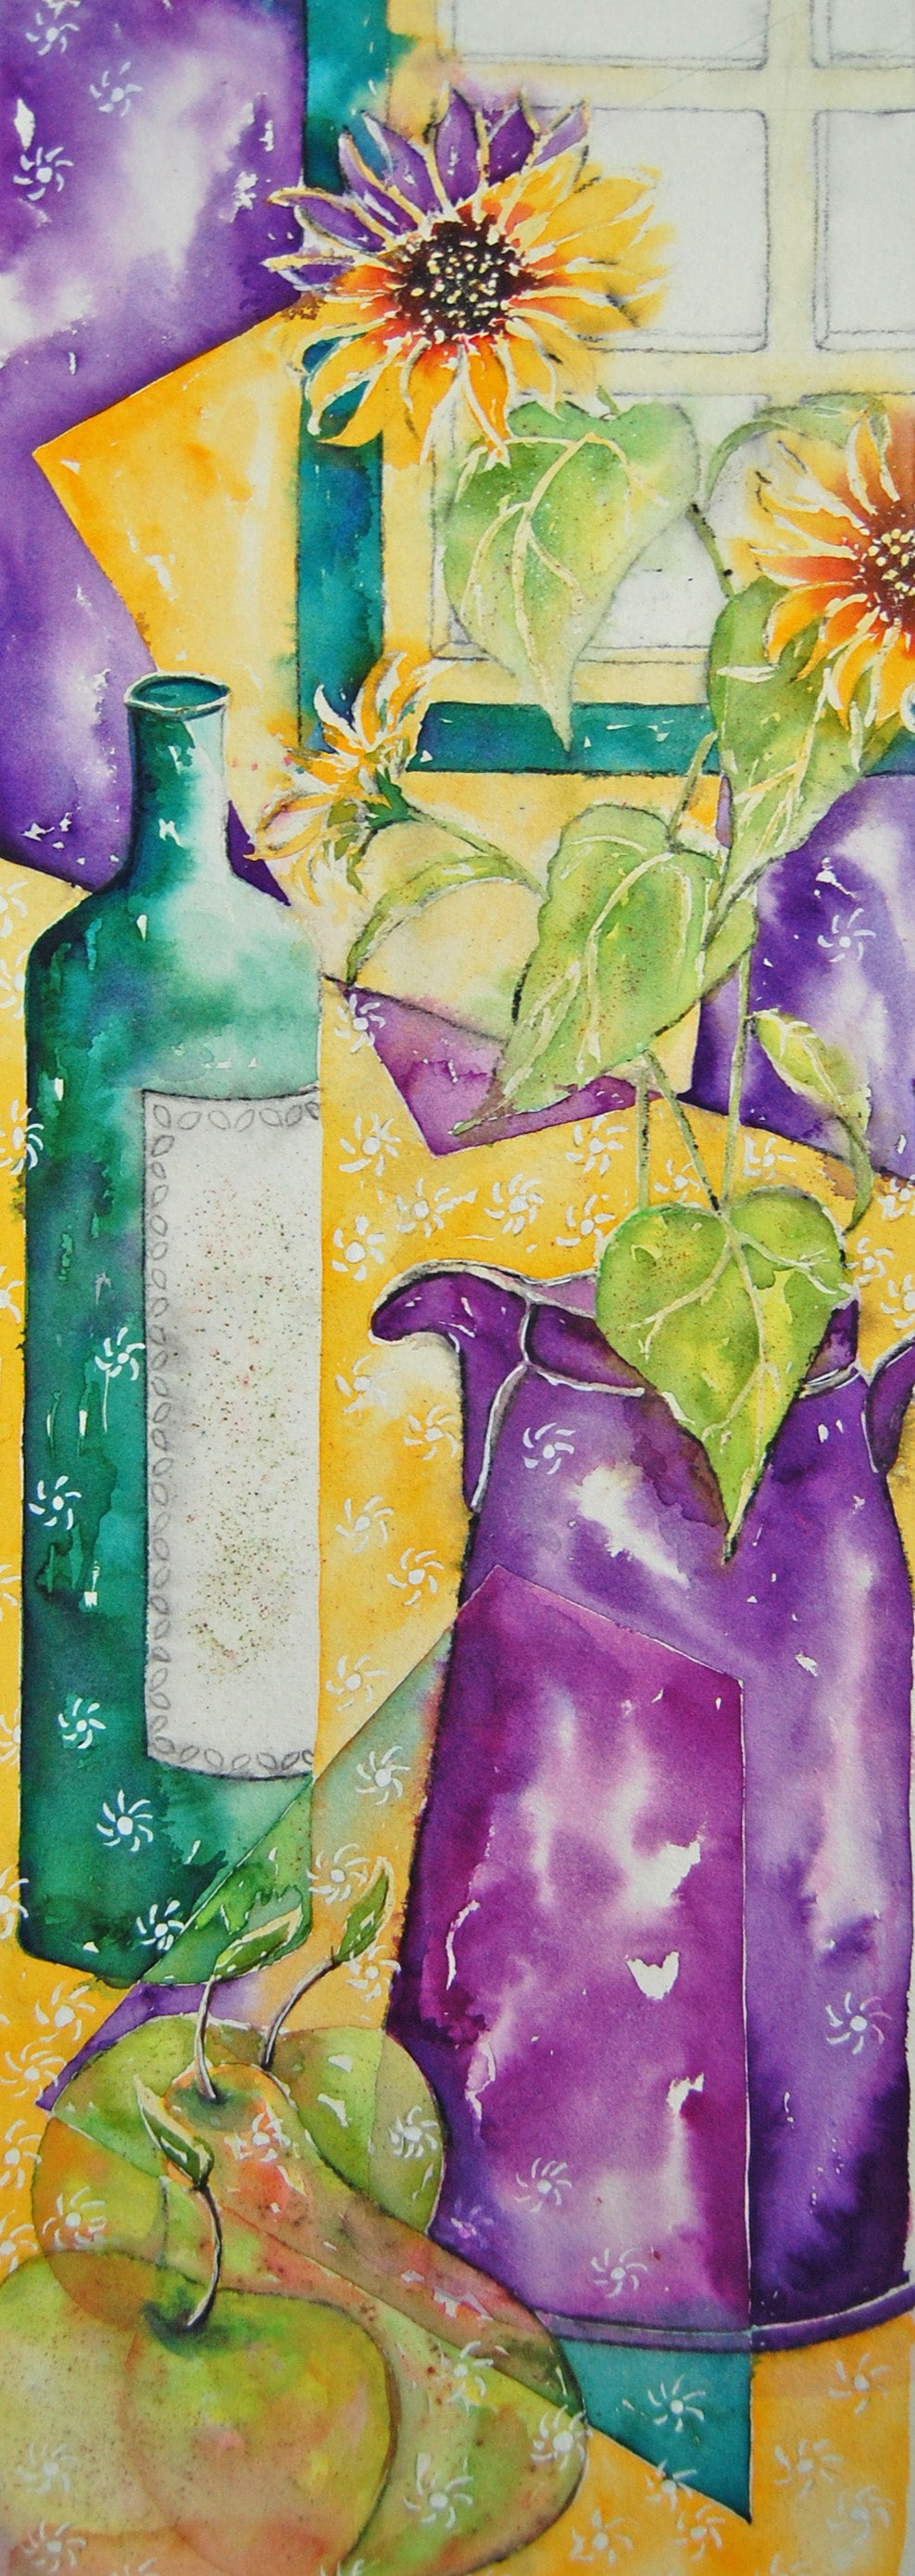 Purple Jug with Sunflowers I - Original Painting